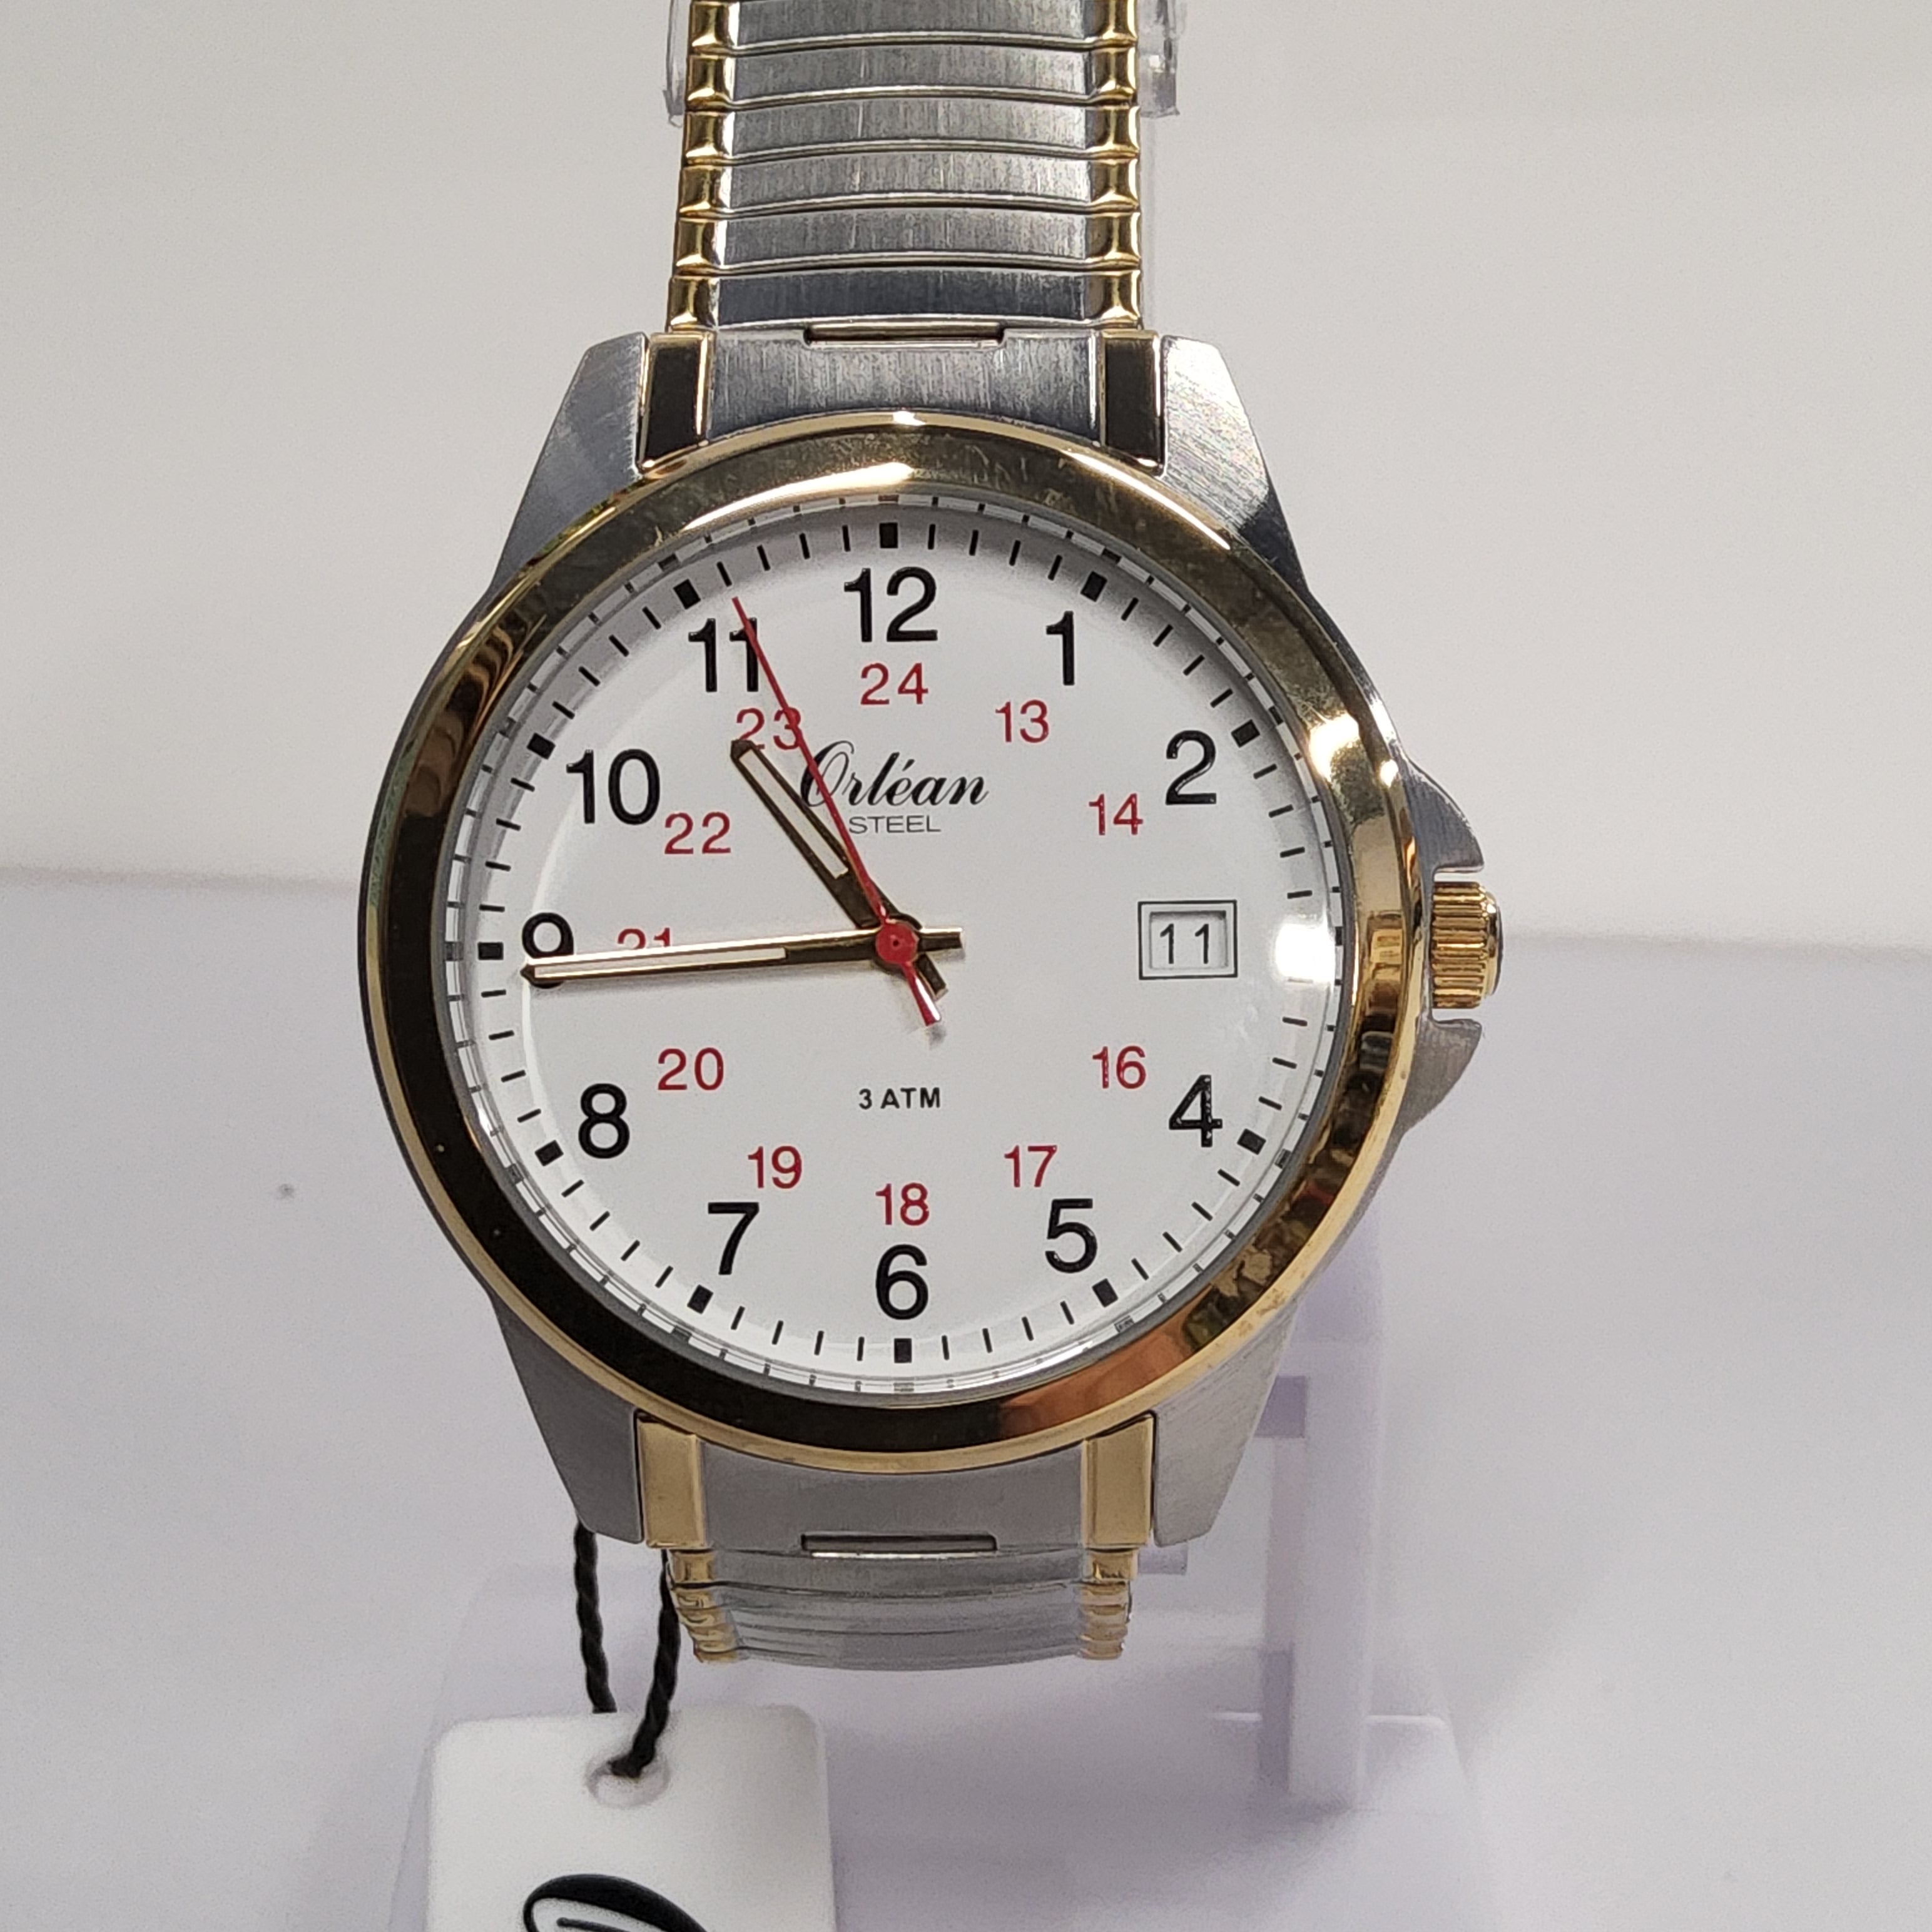 Orlean Watch - Expansion Bracelet - 24 Hour ME3341